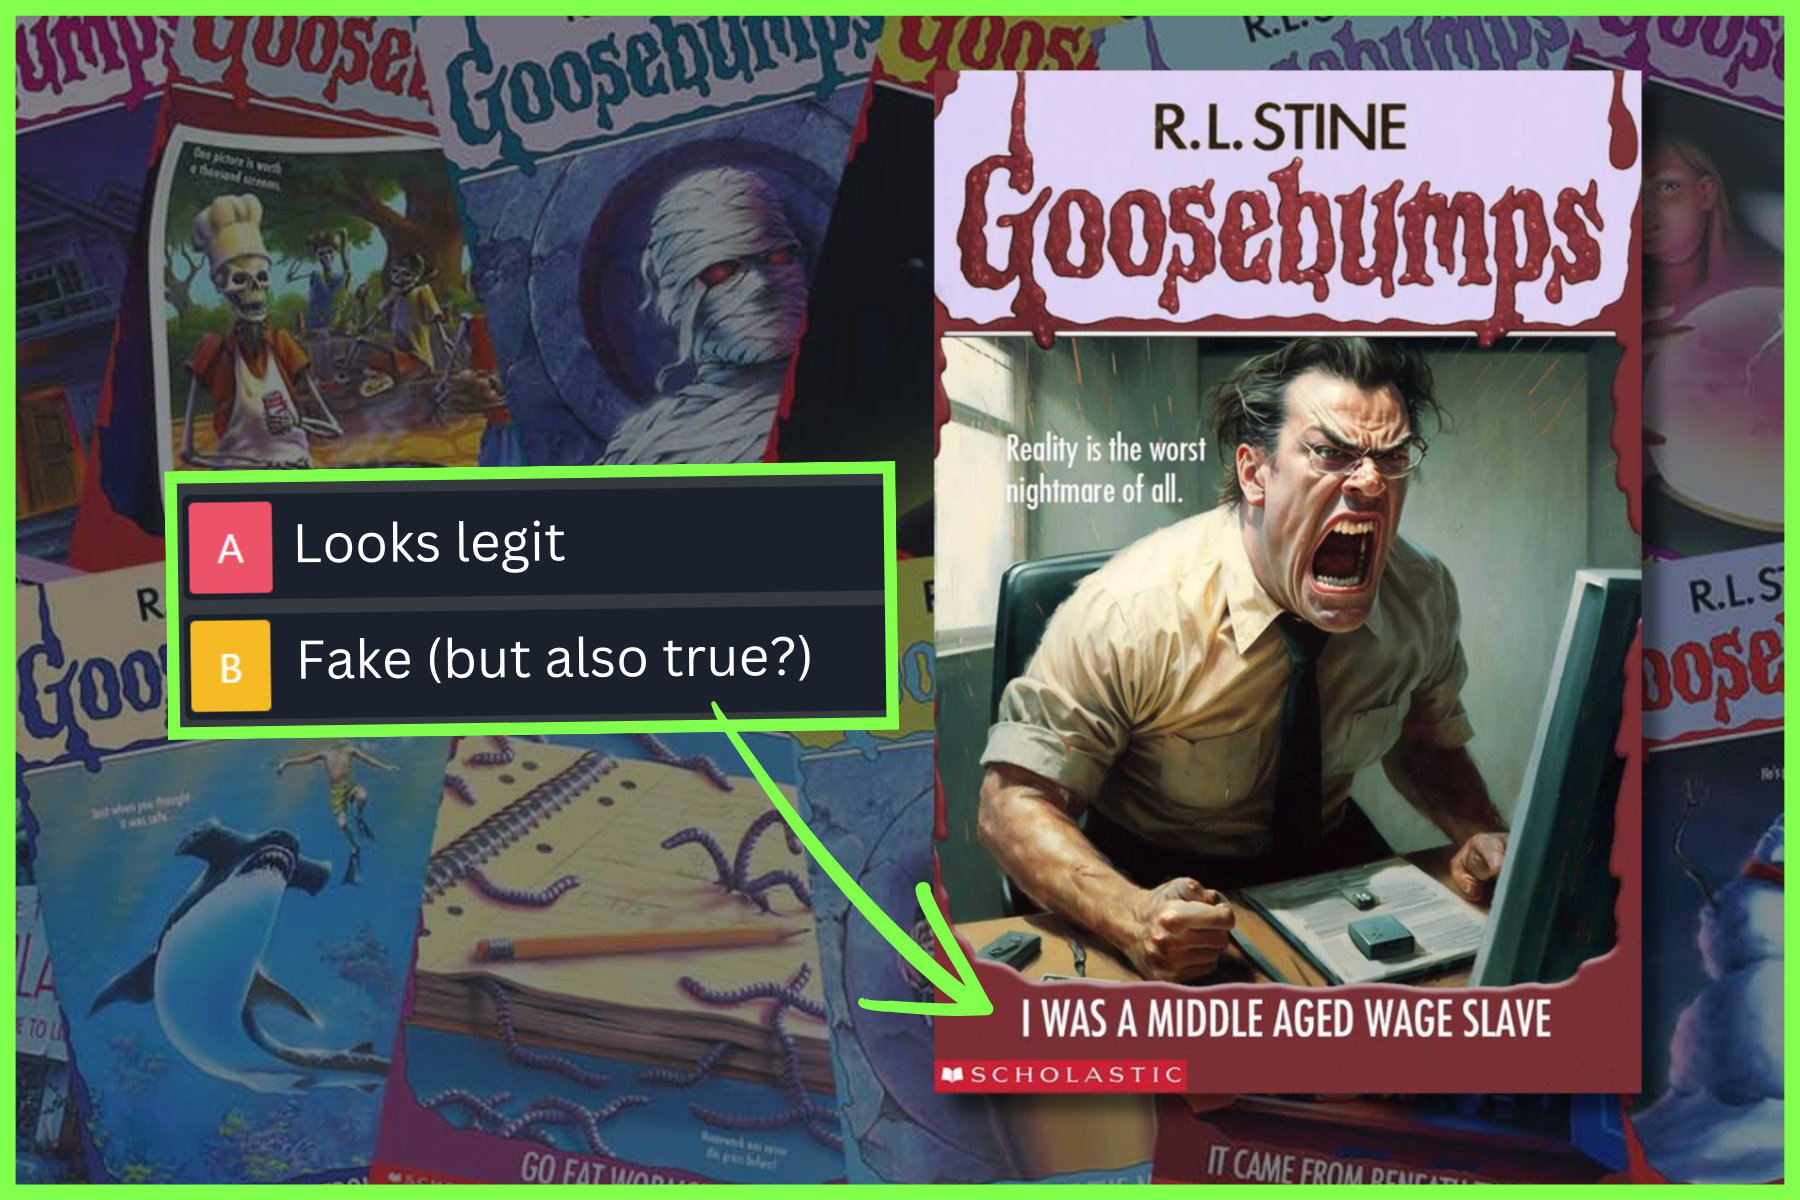 Goosebumps Books: Real or Fake?